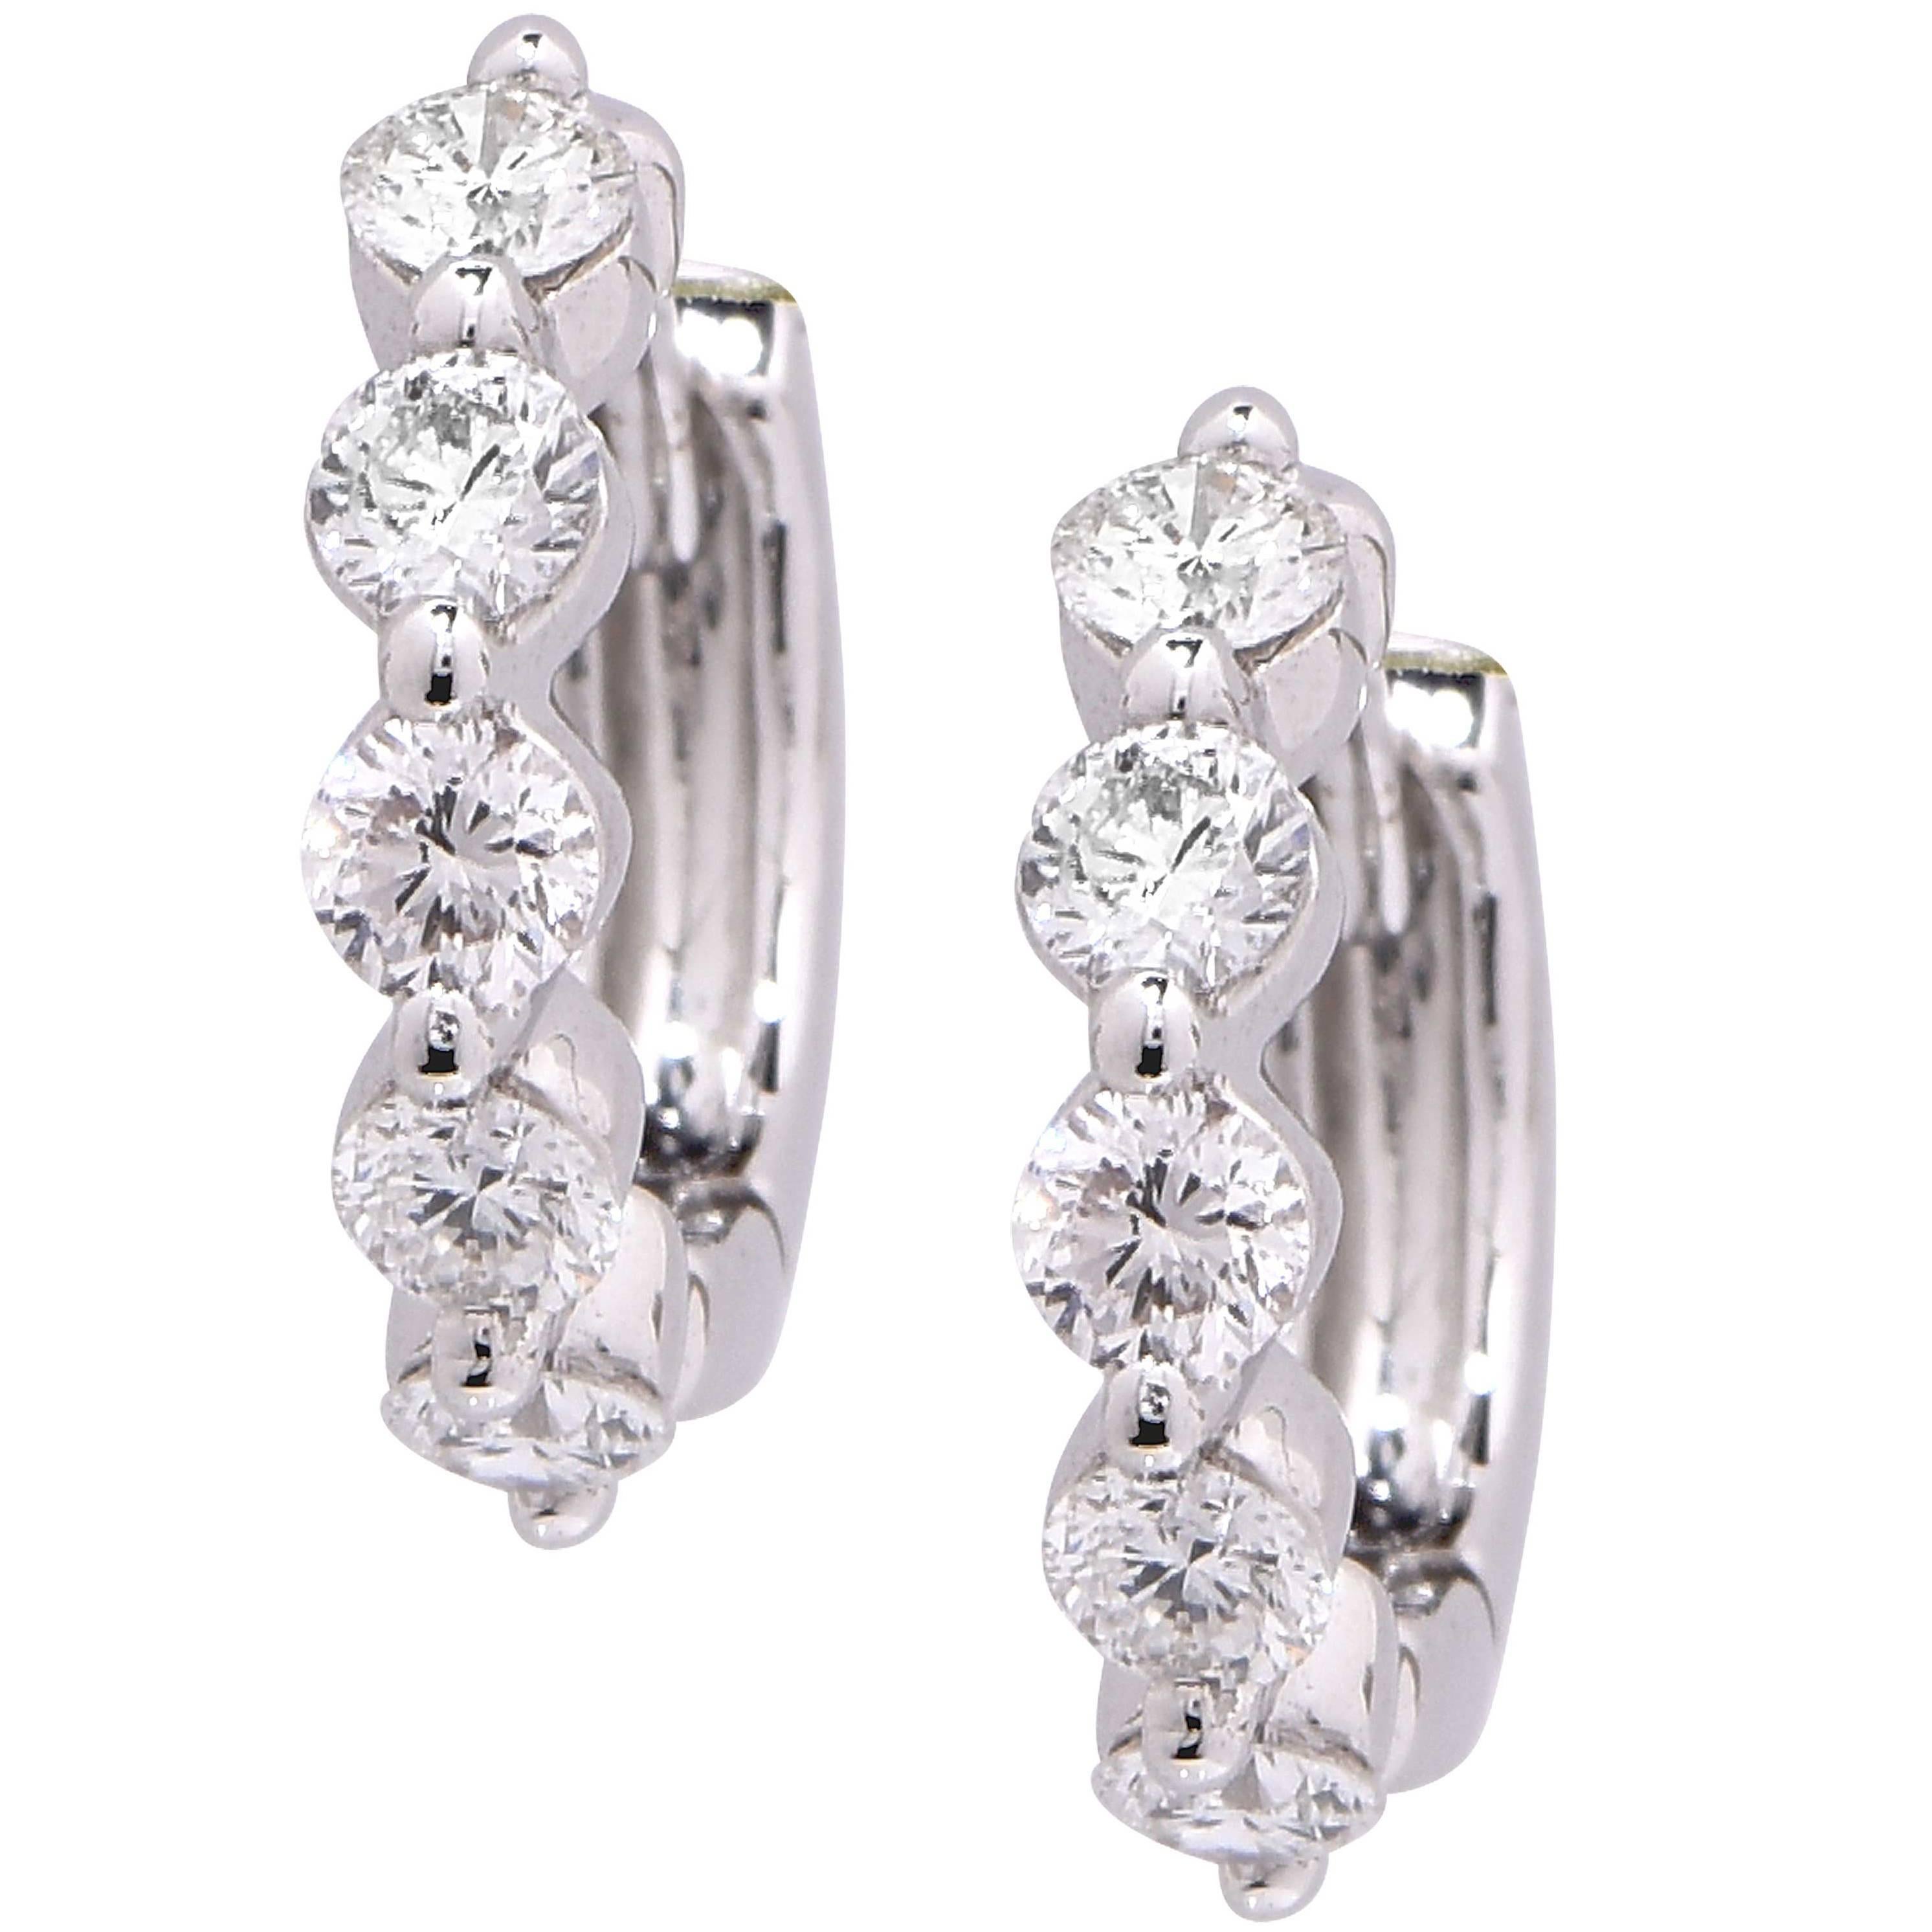 .60 Carat Diamond White Gold Small Hoop Earrings